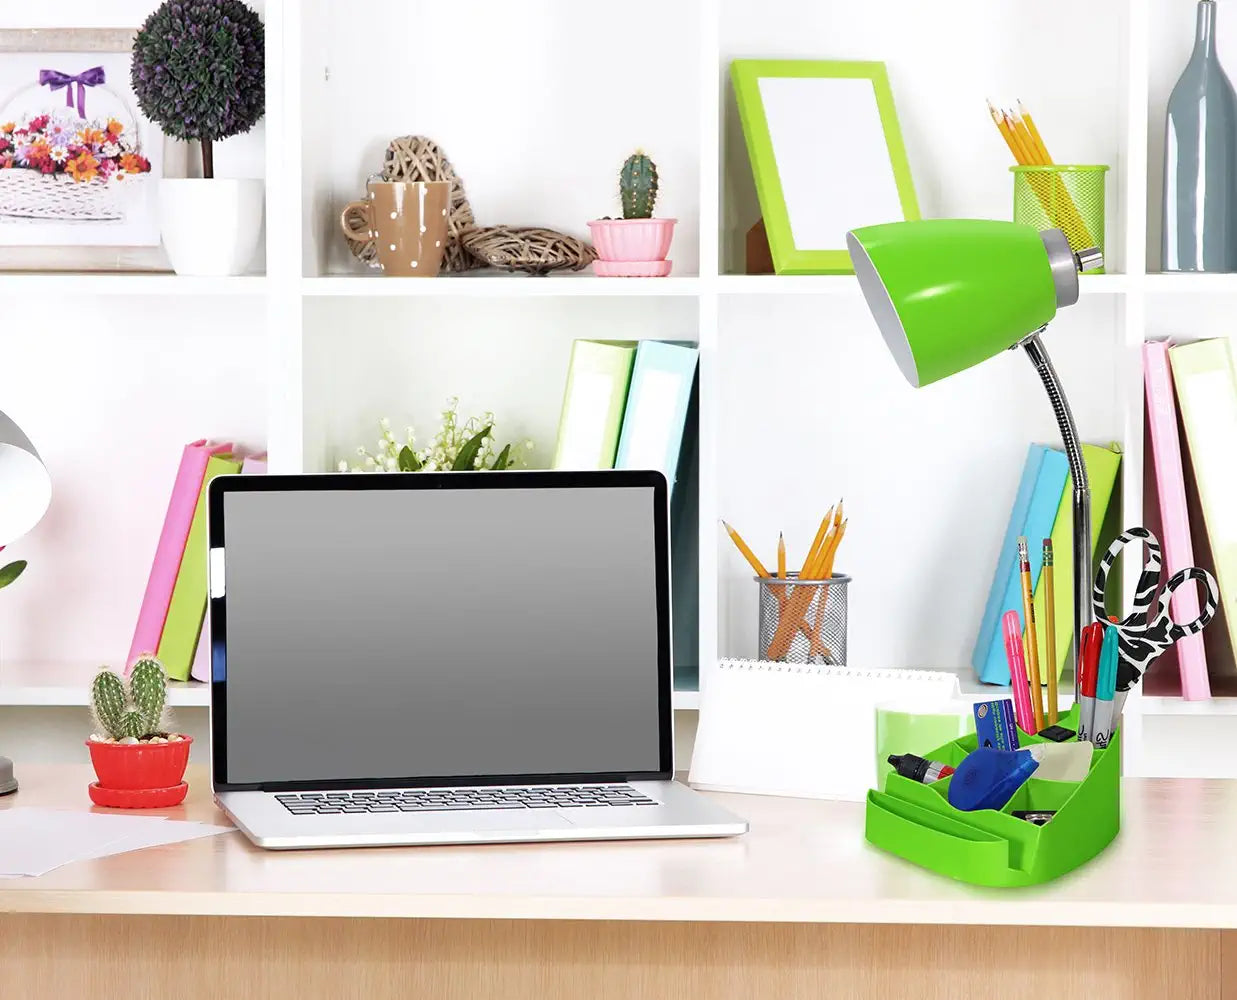 Limelights LD1057-GRN Gooseneck Organizer iPad Tablet Stand Book Holder and Charging Outlet, Green Desk Lamp